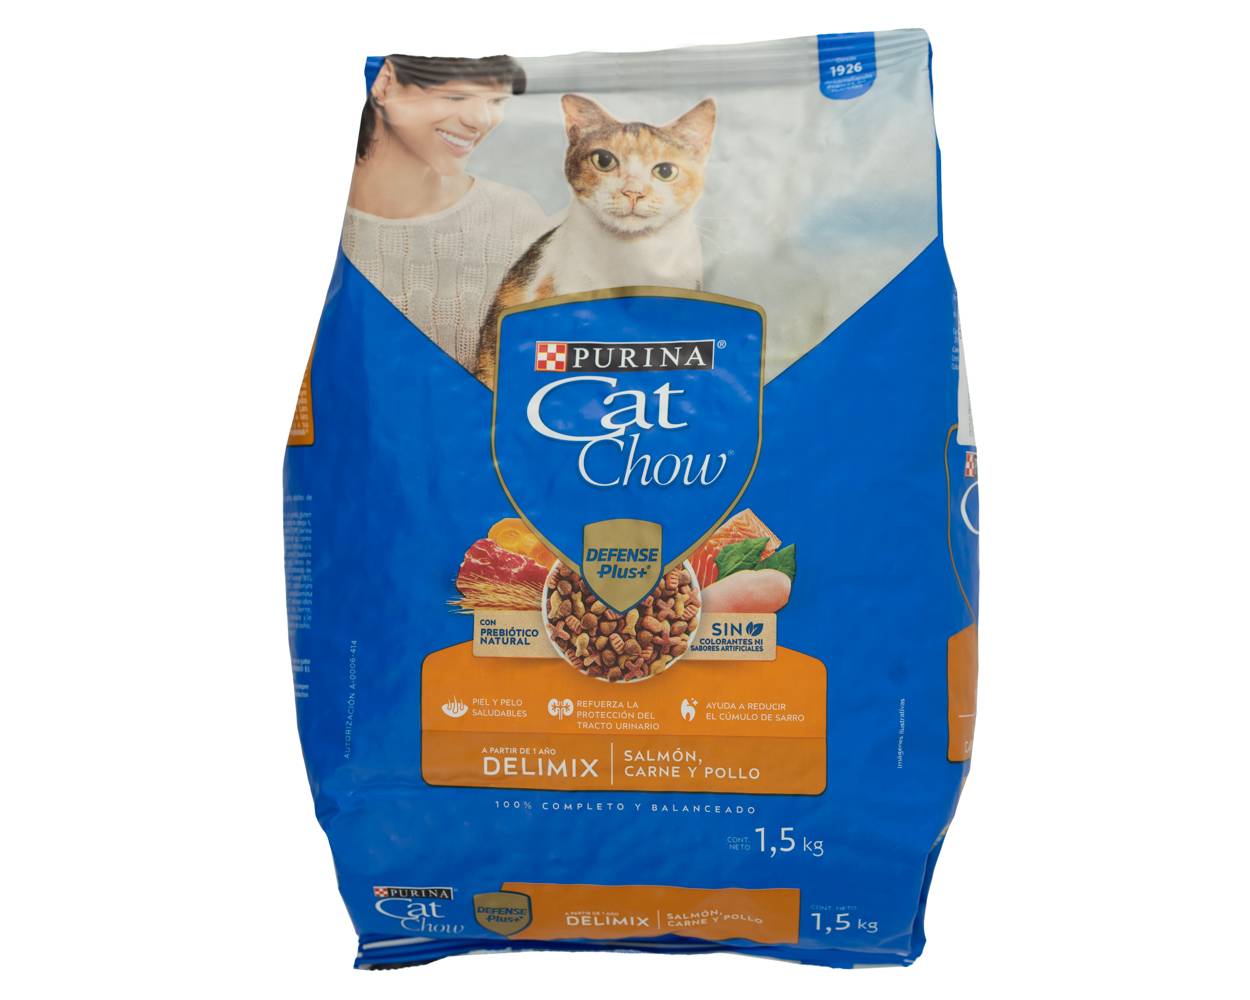 Cat chow alimento deli mix para gatos (1.5 kg)